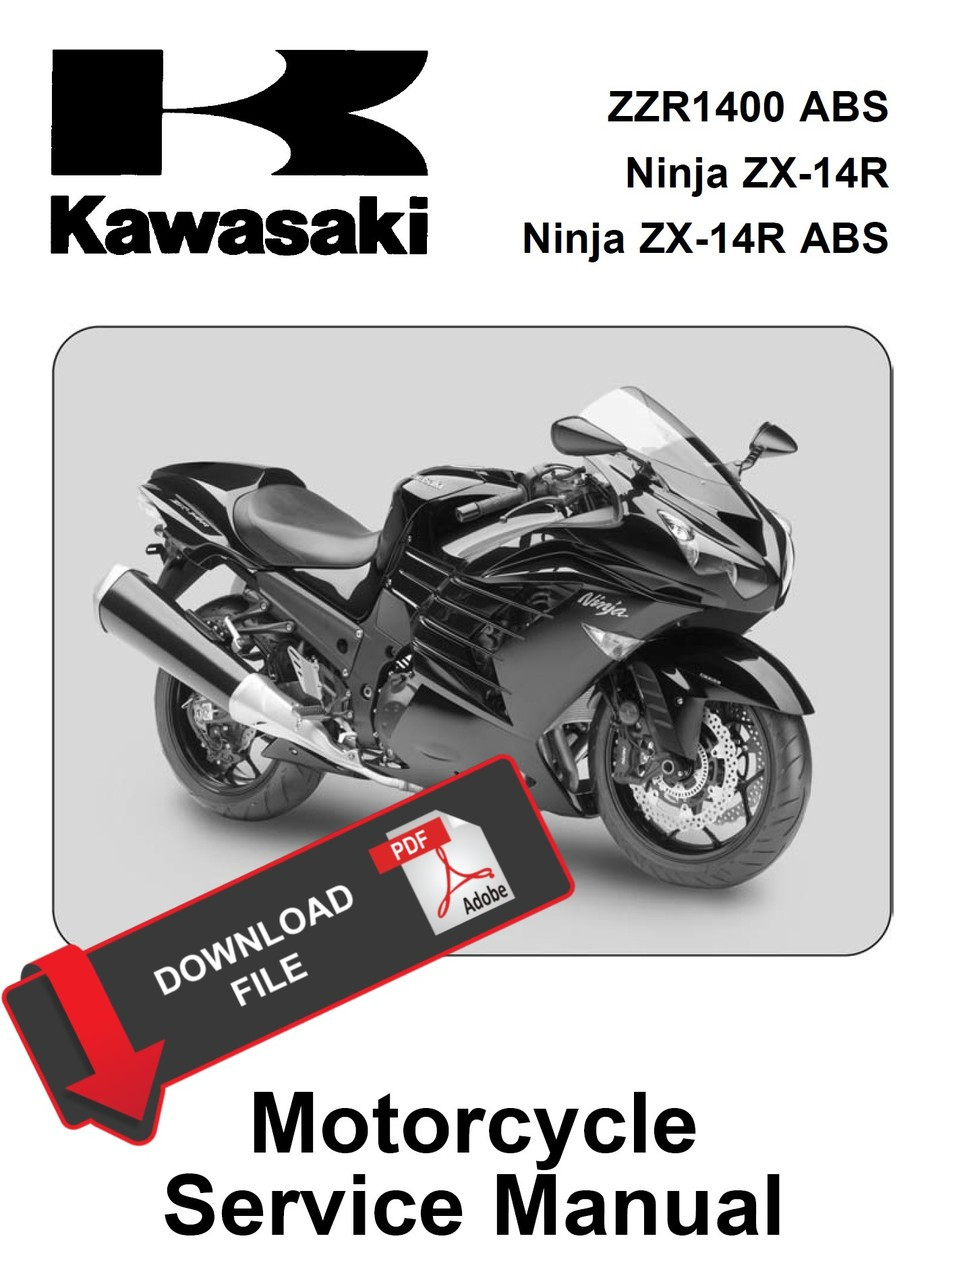 Pind Overfladisk klæde sig ud Kawasaki 2013 Ninja ZZR1400 ABS Service Manual